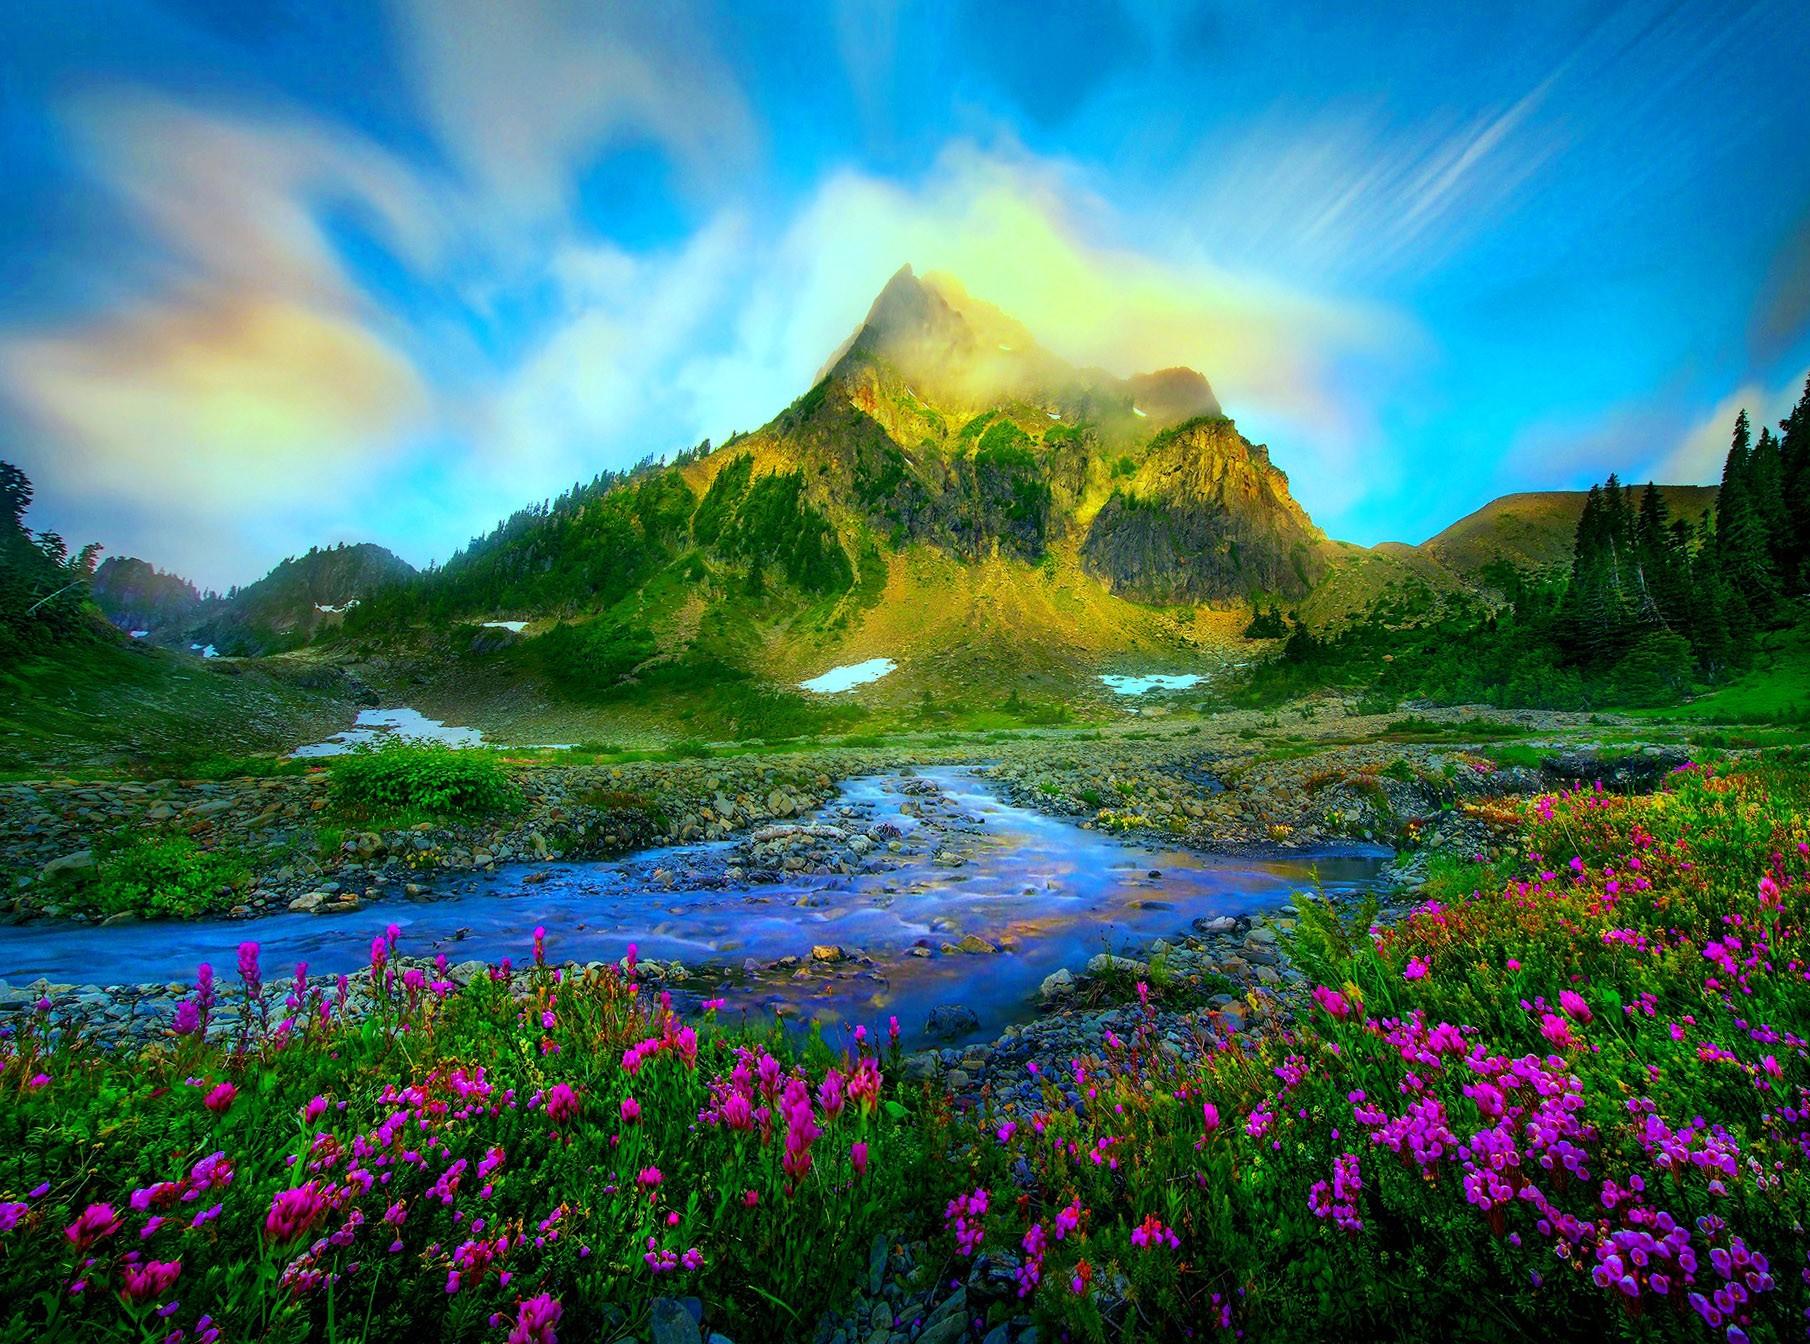 Nature Wallpaper, HD Landscape Image, Widescreen